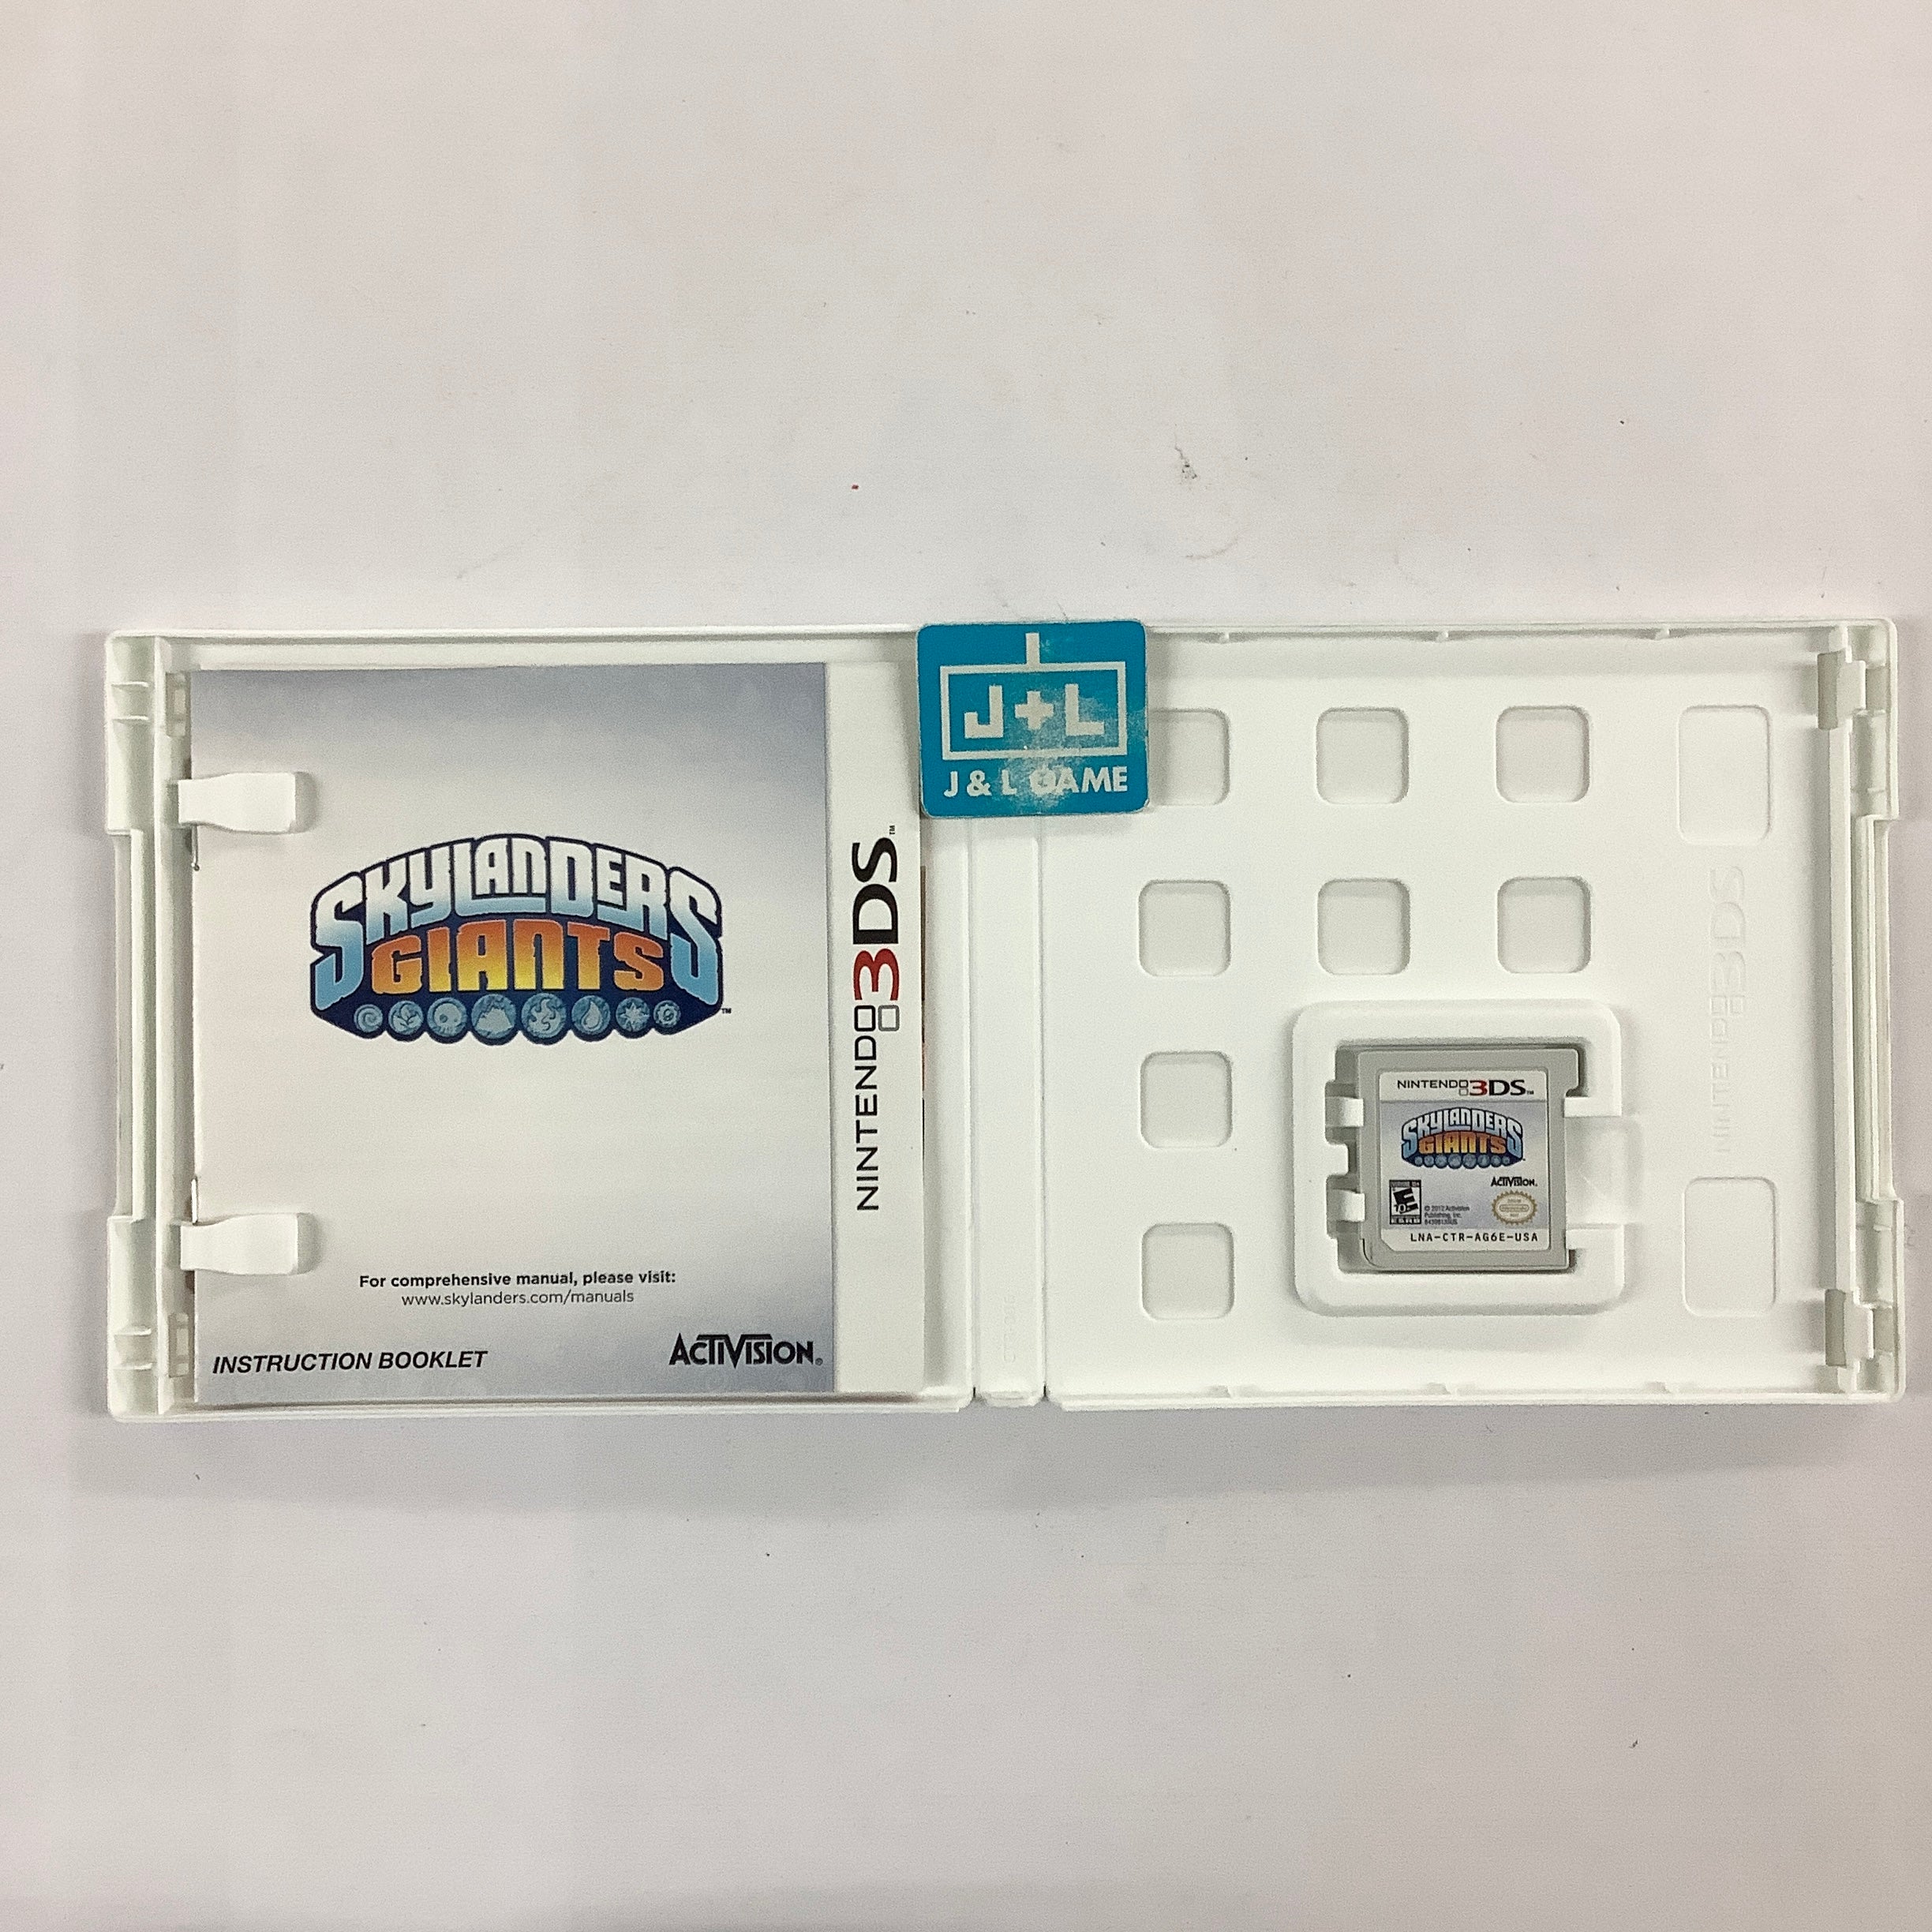 Skylanders Giants - Nintendo 3DS [Pre-Owned] Video Games Activision   